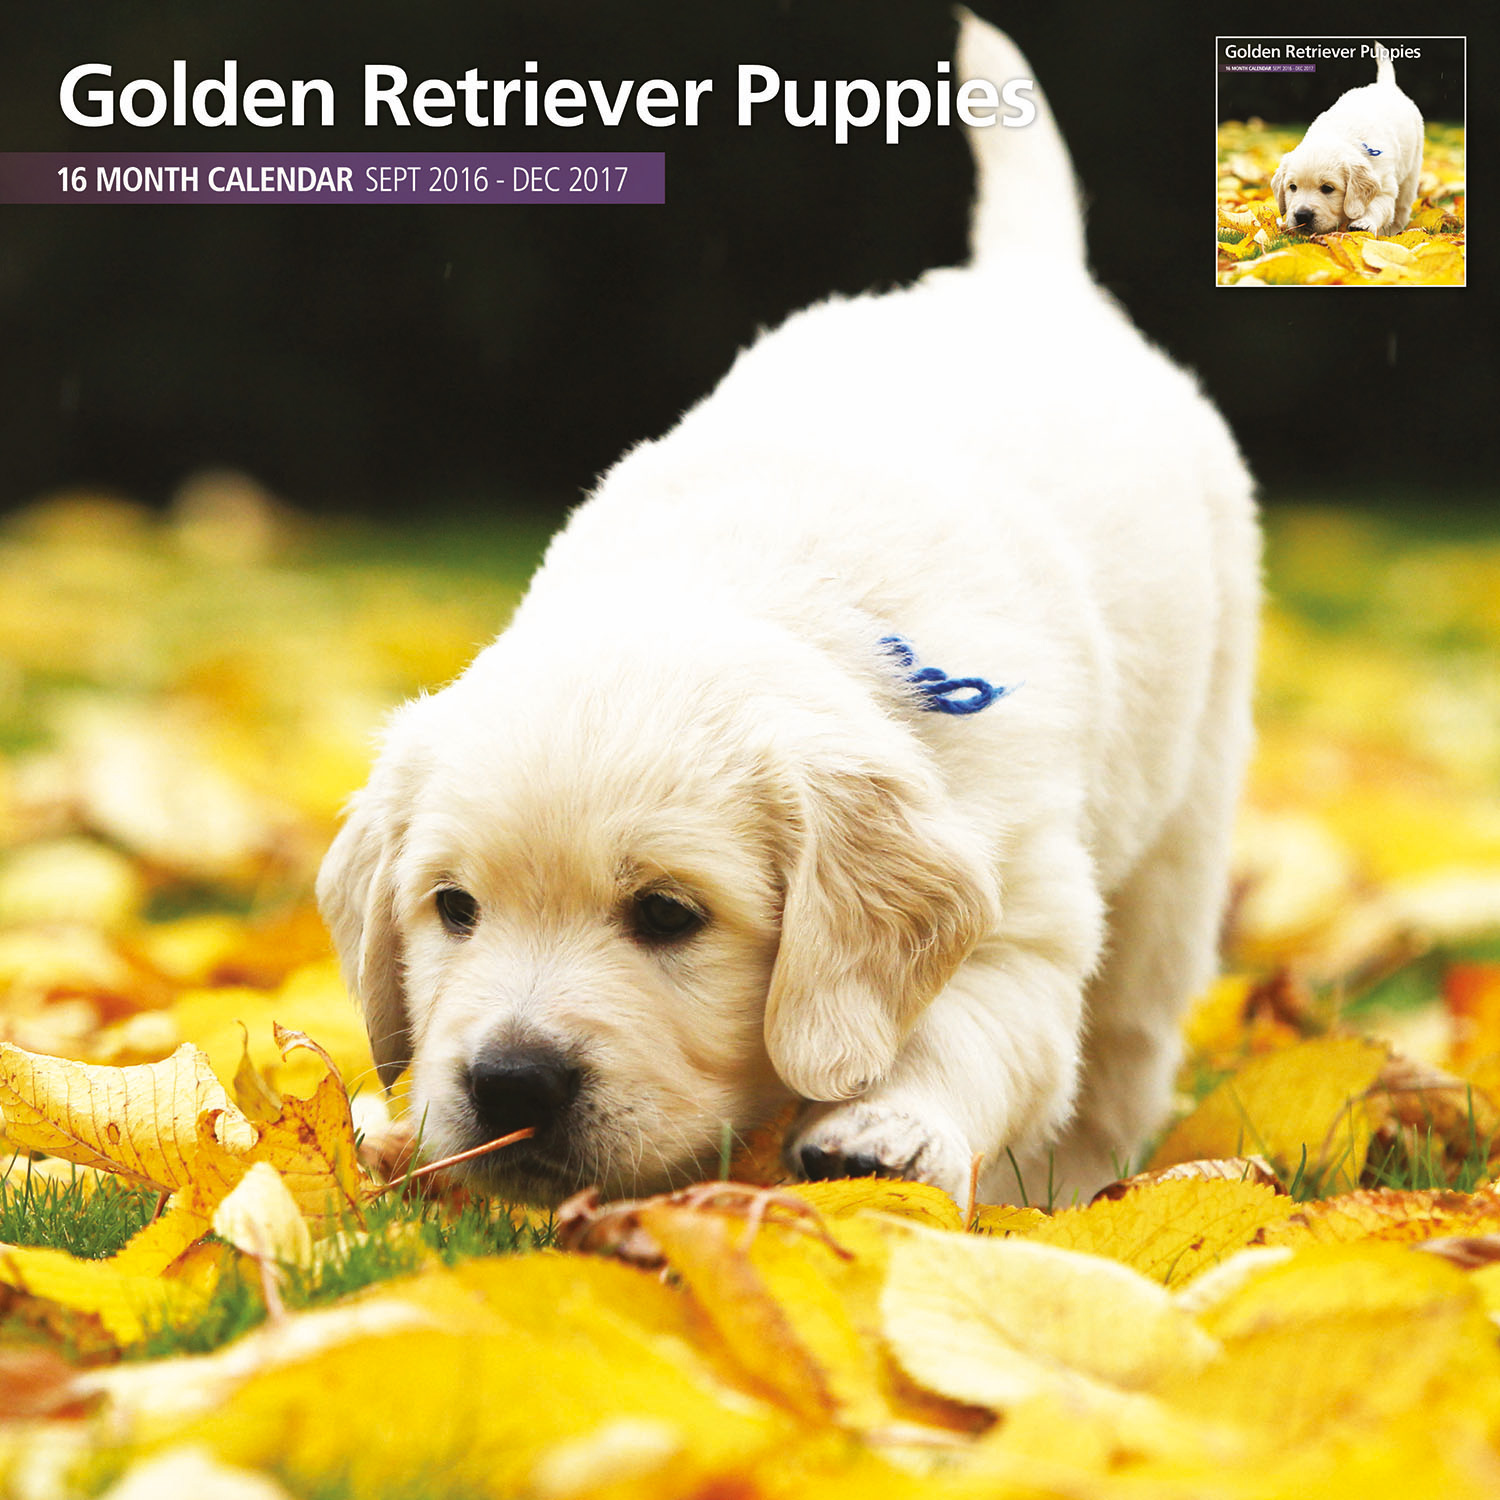 golden-retriever-puppies-2017-16-month-traditional-calendar-9-99-picclick-uk